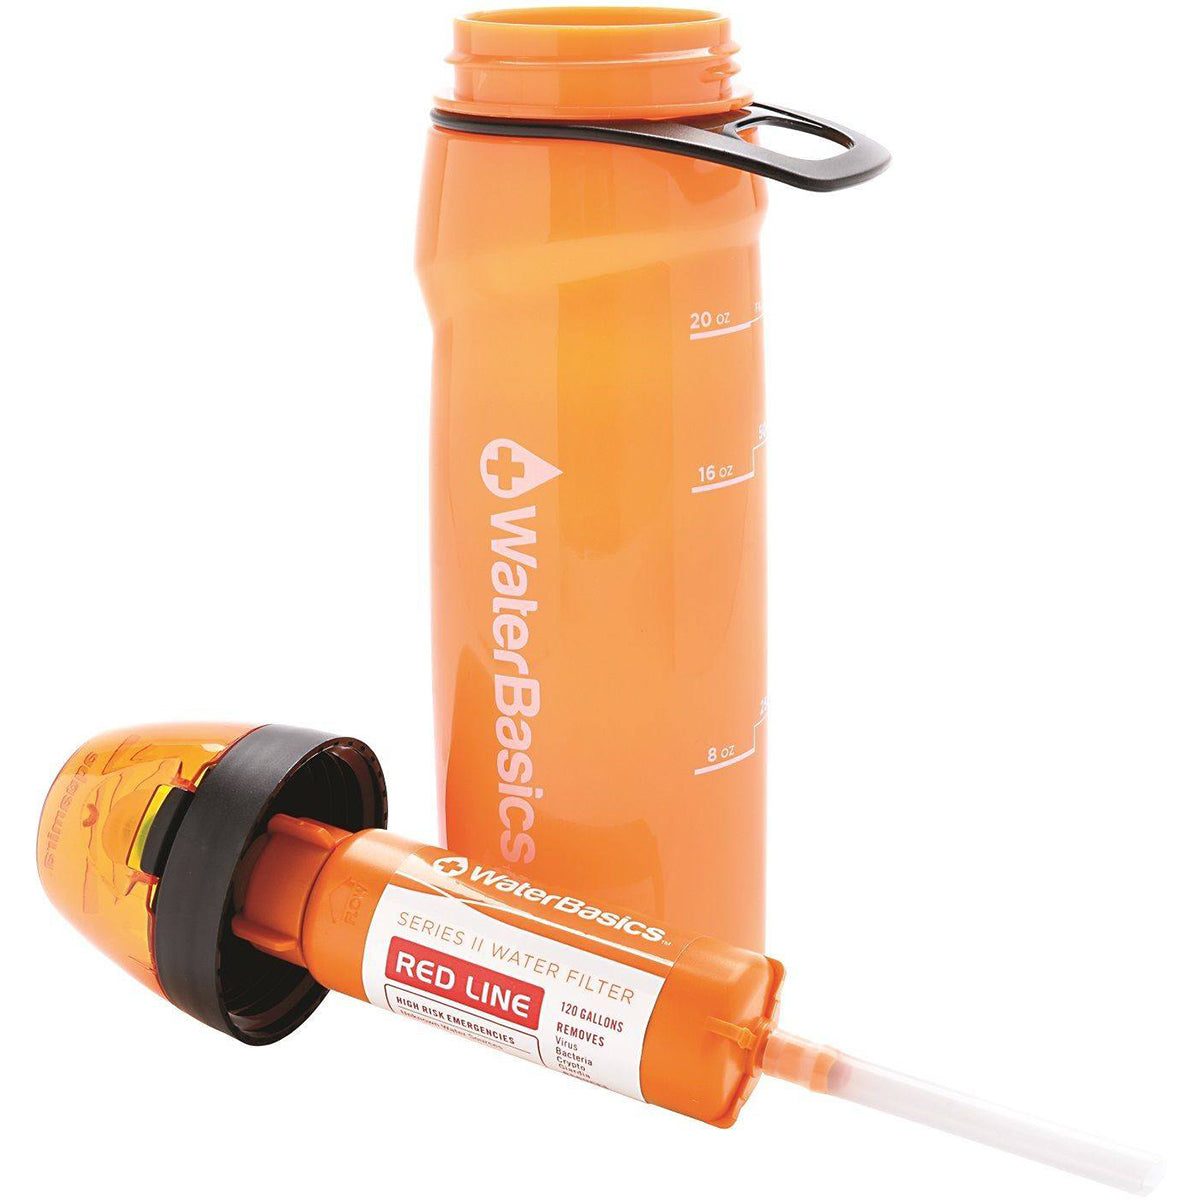 WaterBasics 22 oz. RED Line Emergency Filter Water Bottle Aquamira